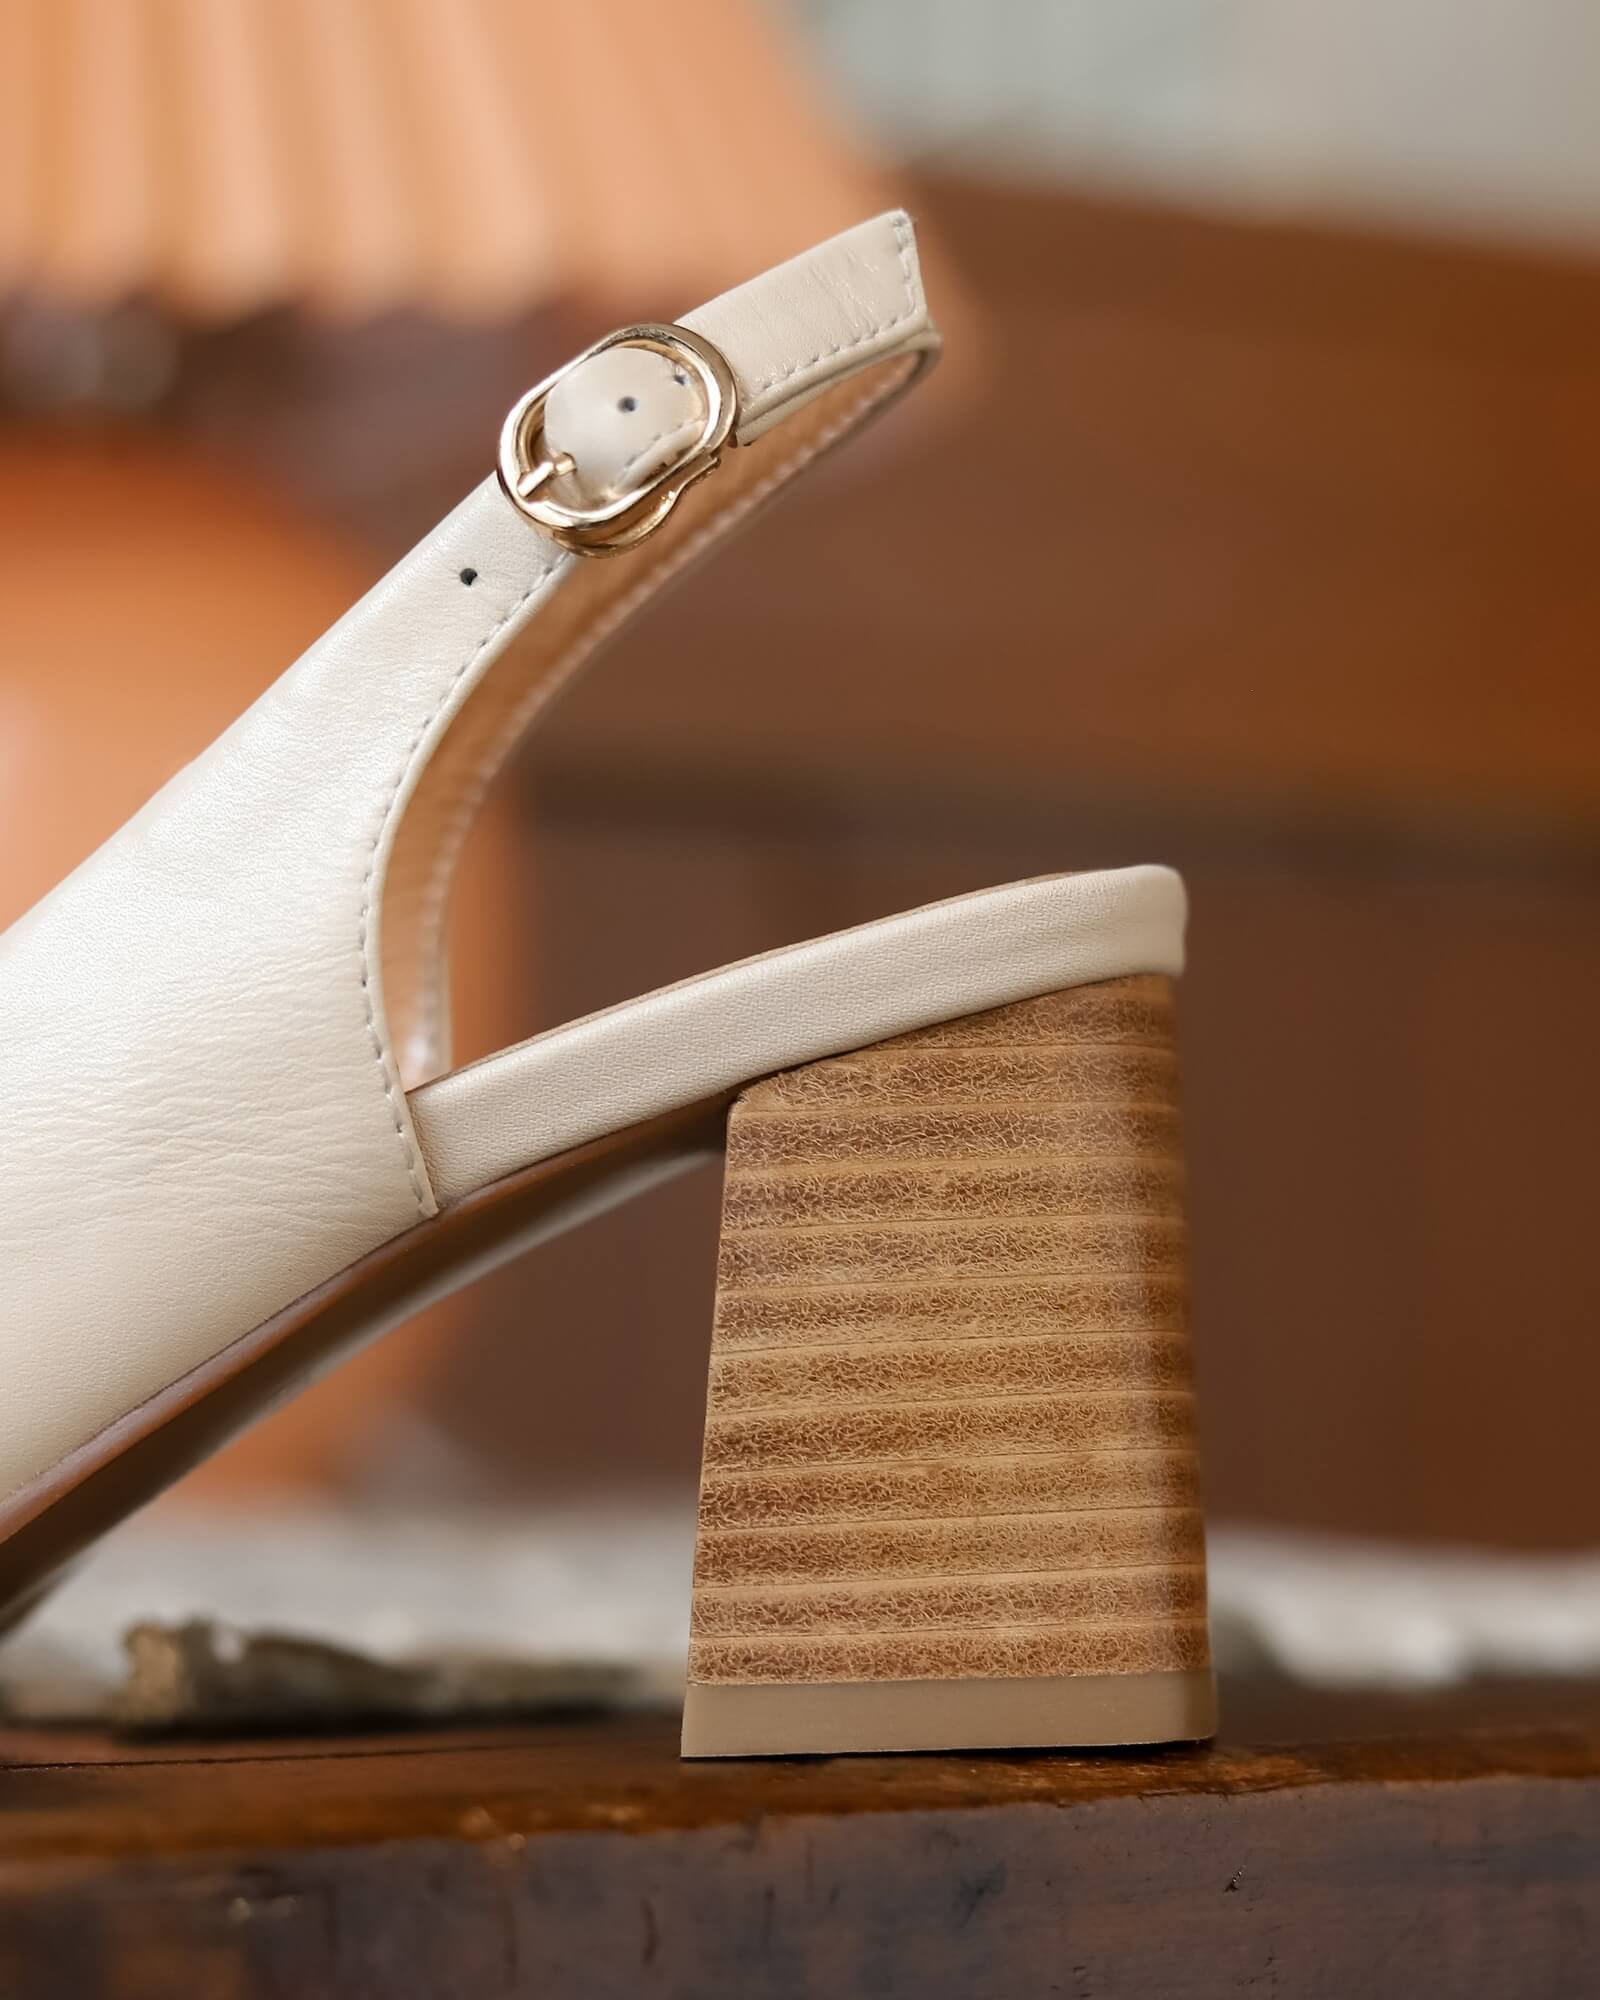 Buy Women's Block Heels, Ankle Strap Low Heel Pump Sandals, VIANNA-WHITE  PU-8 at Amazon.in